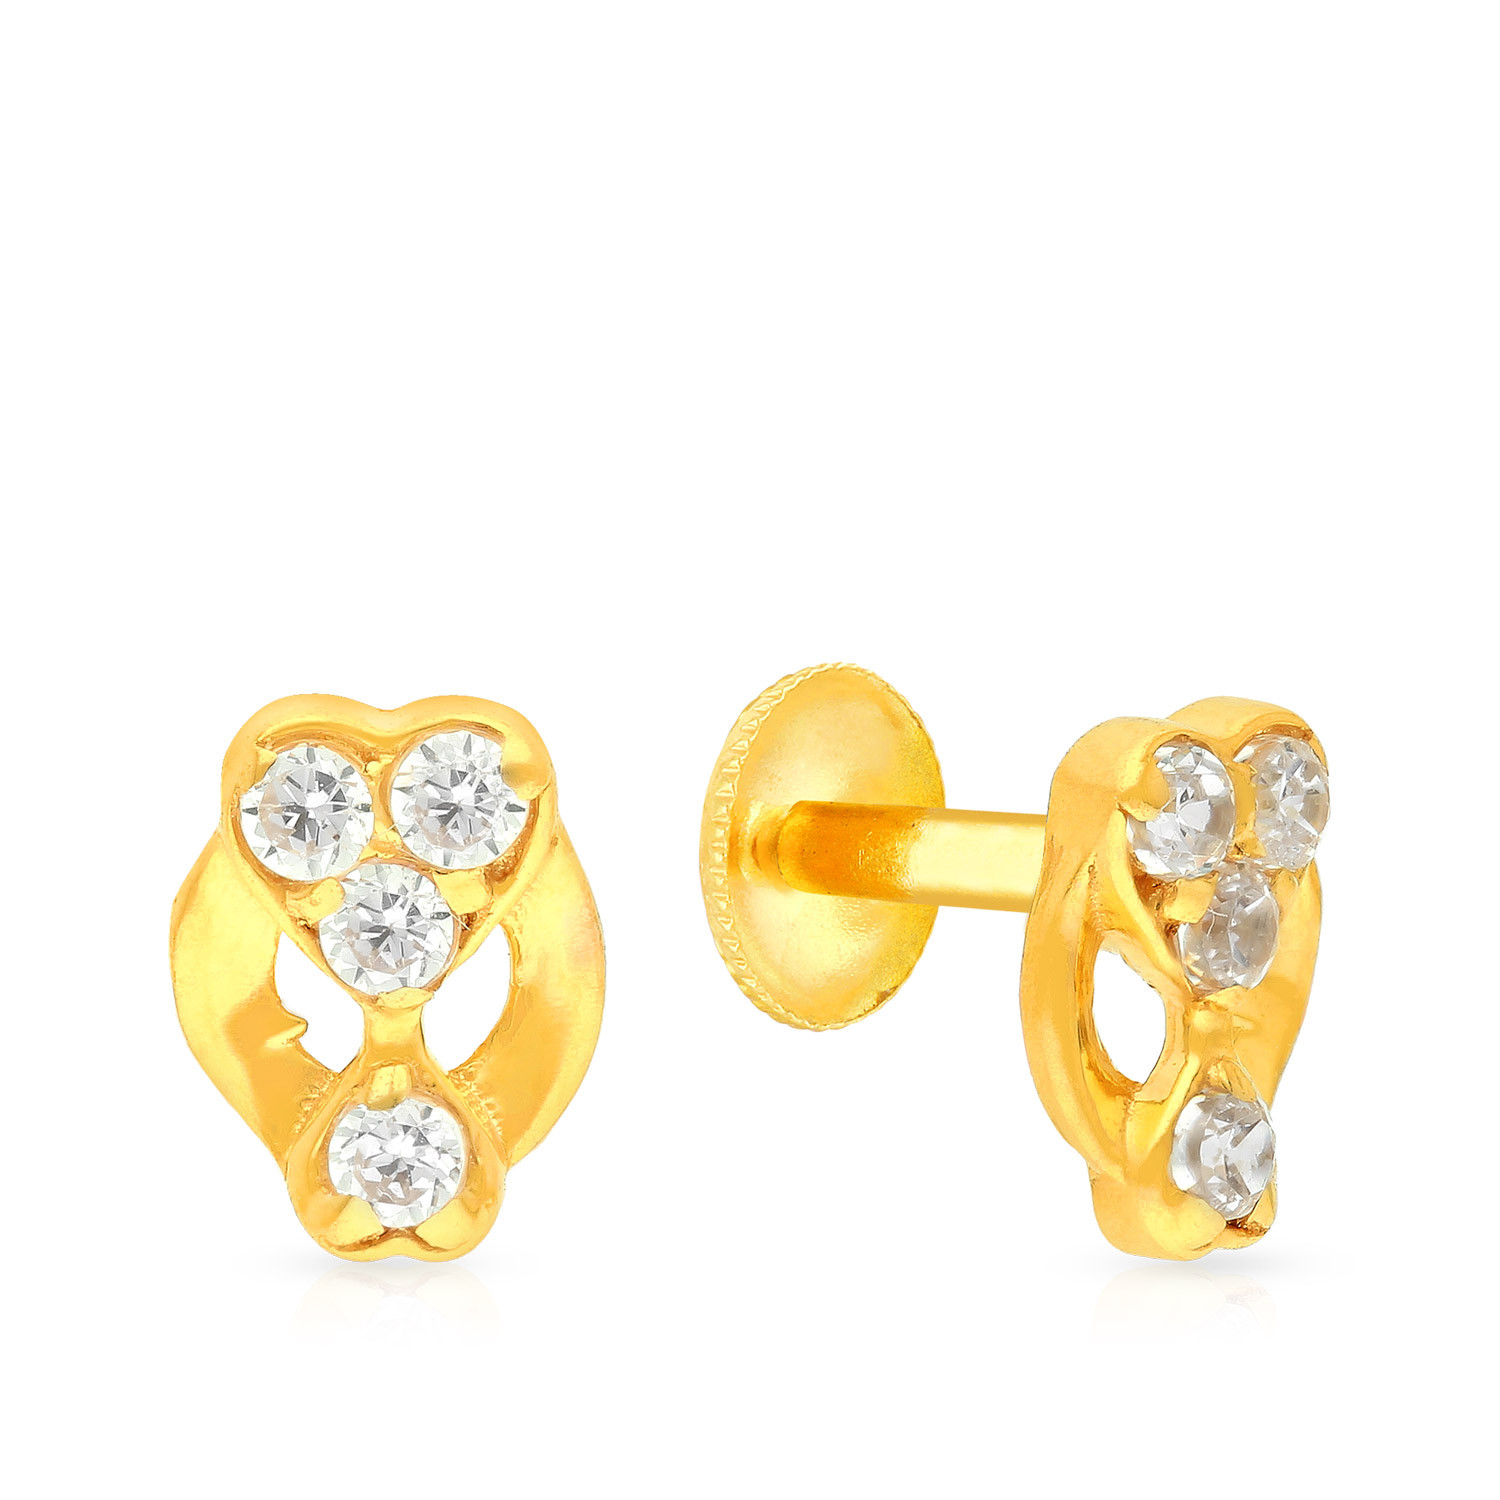 Buy Elegant Gold Plated Small Size Tops Earrings Gold Design for Kid Girl